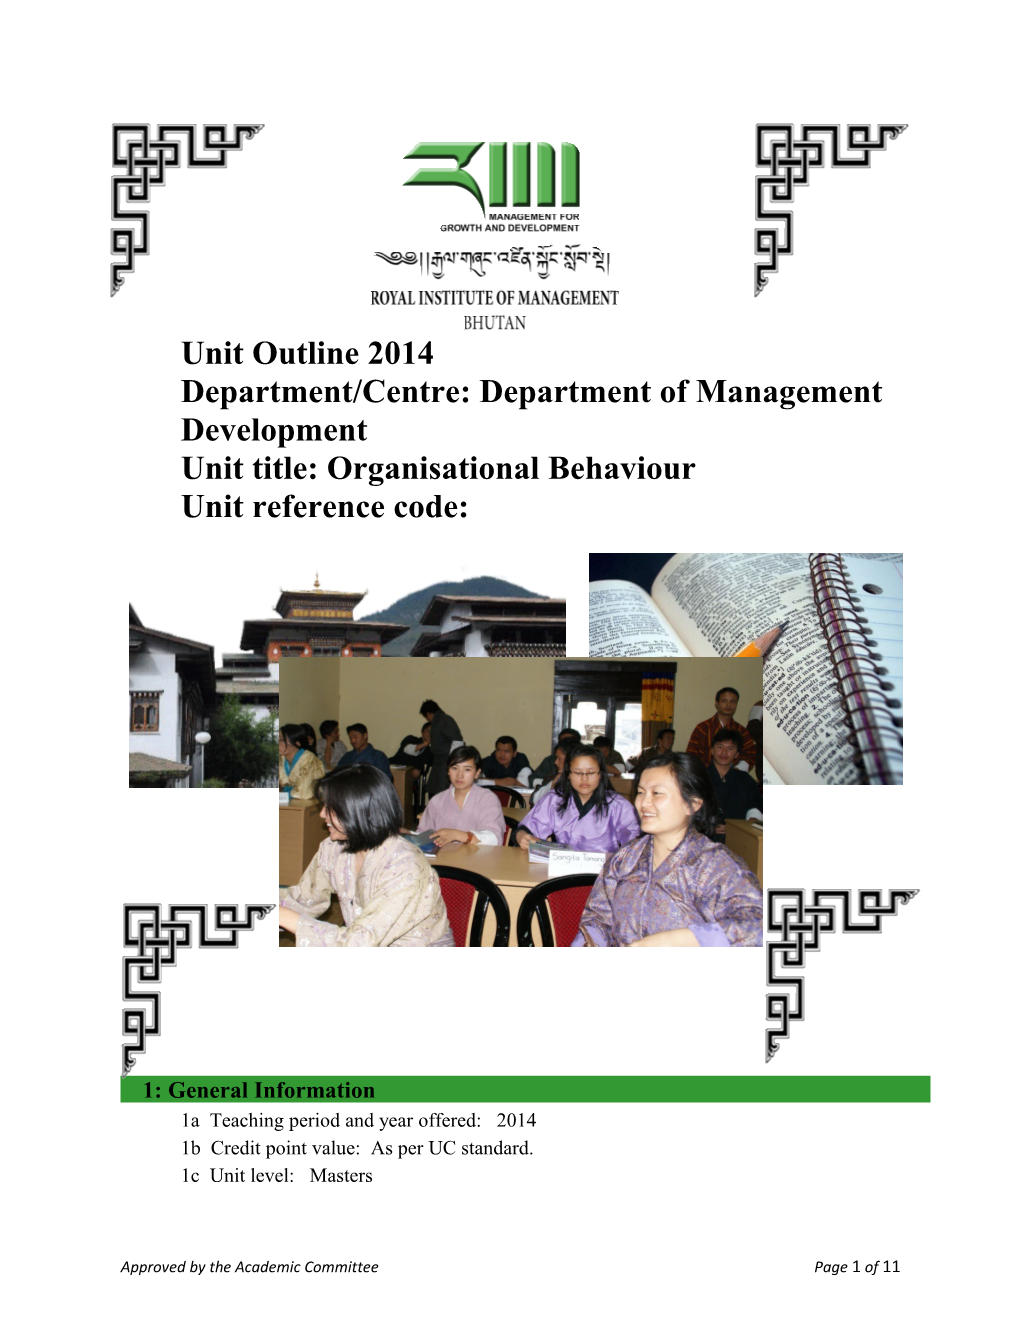 Department/Centre: Department of Management Development